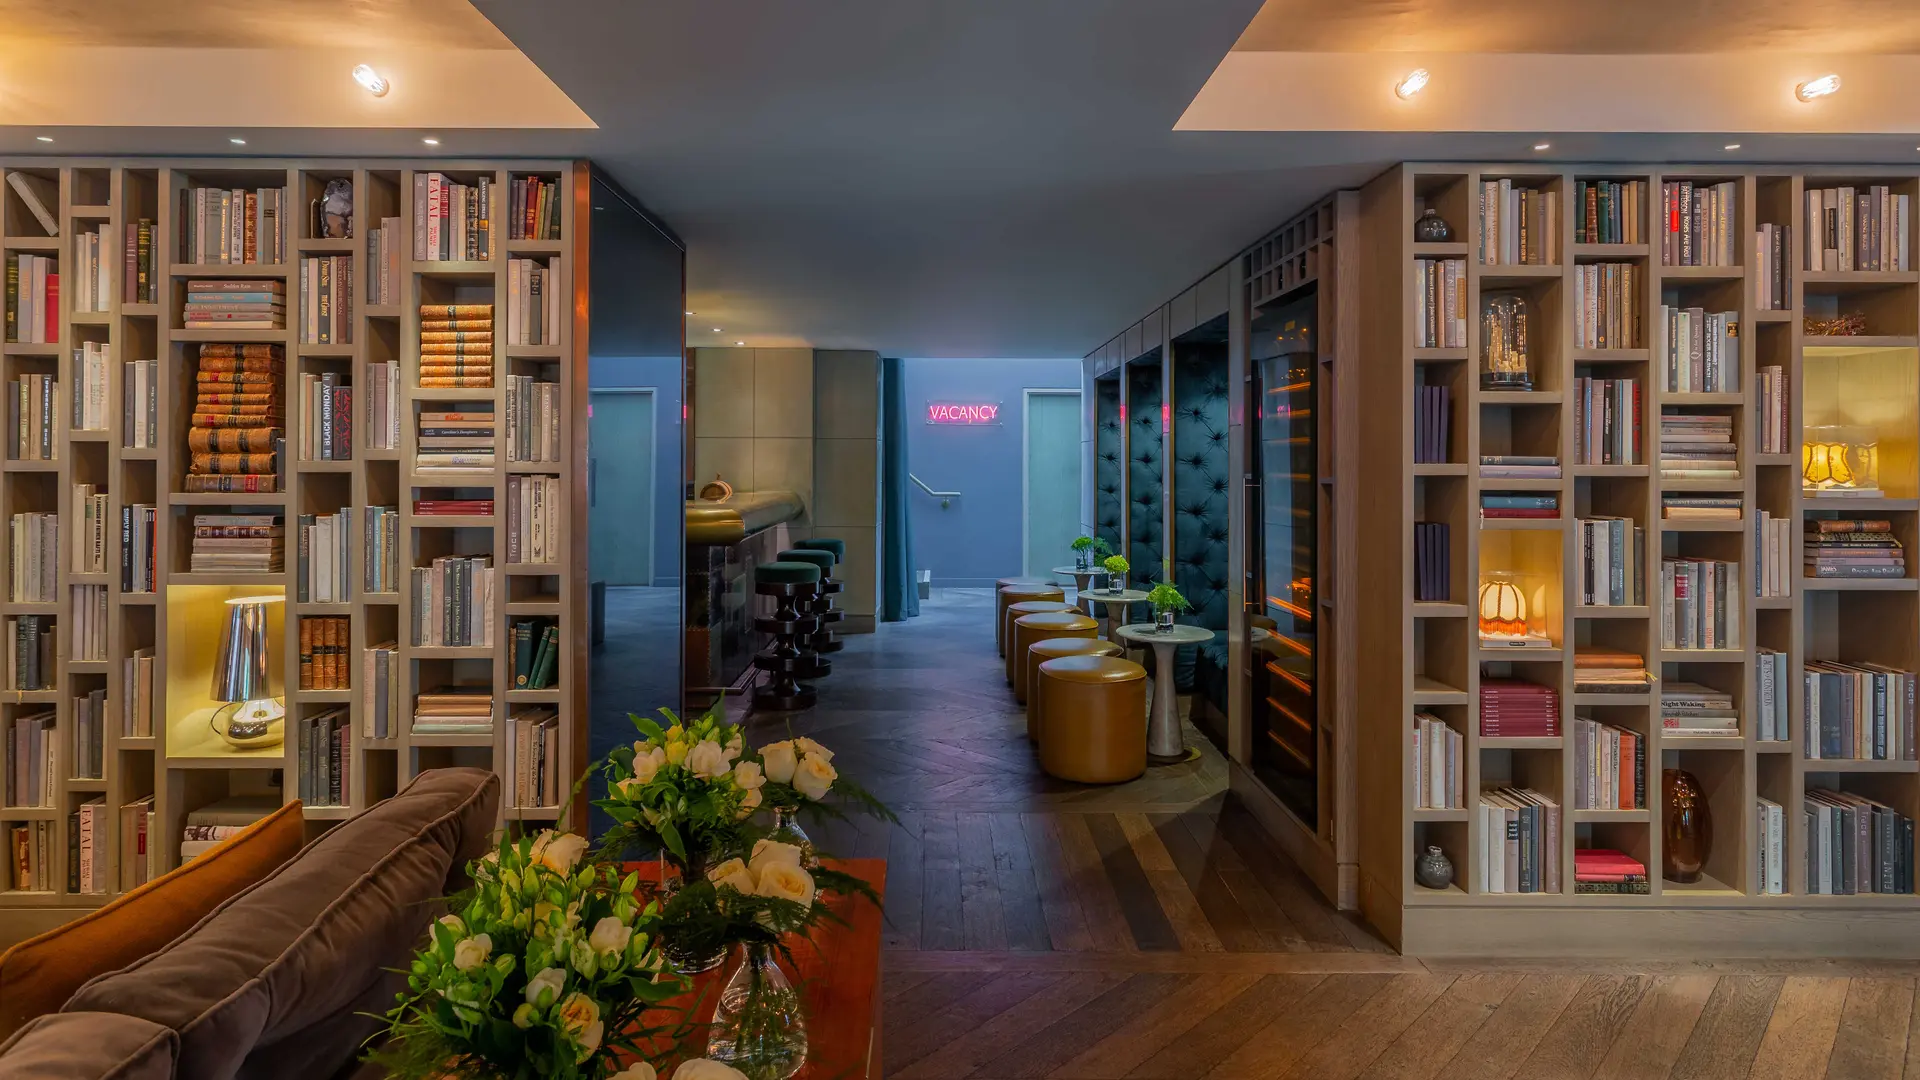 Hotel review Service & Facilities' - The Hari - London - 0